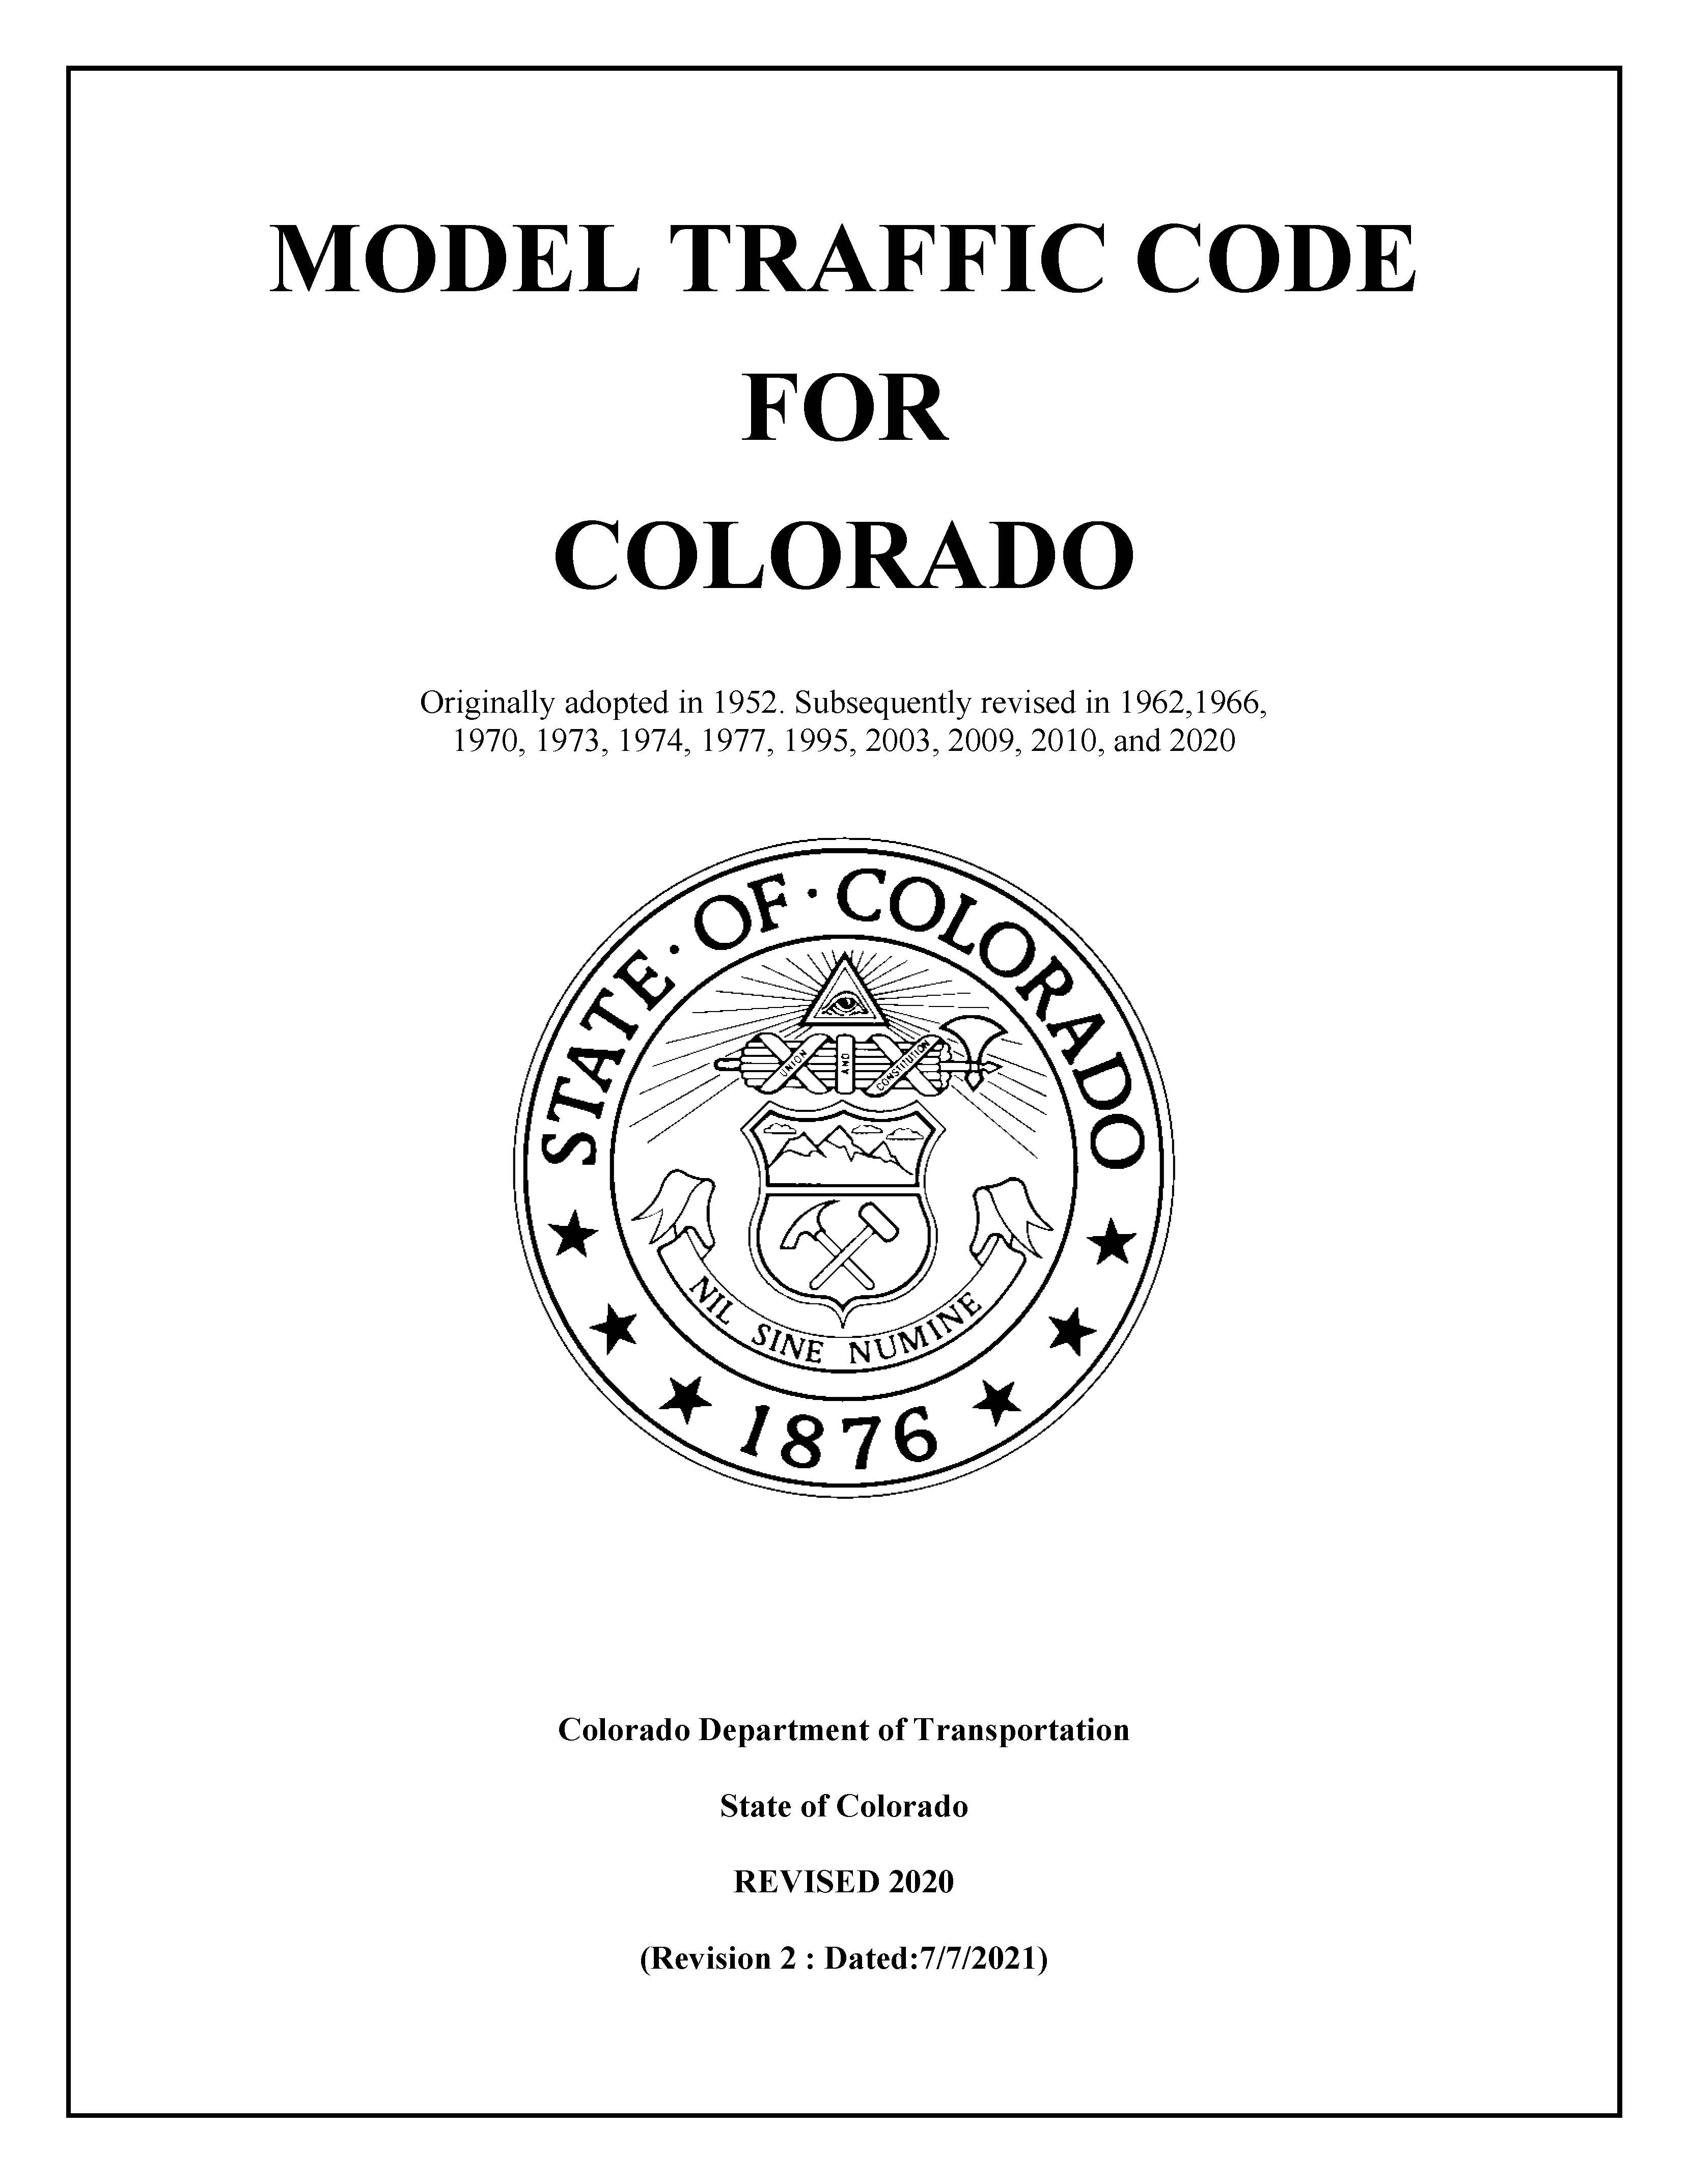 Colorado Model Traffic Code detail image